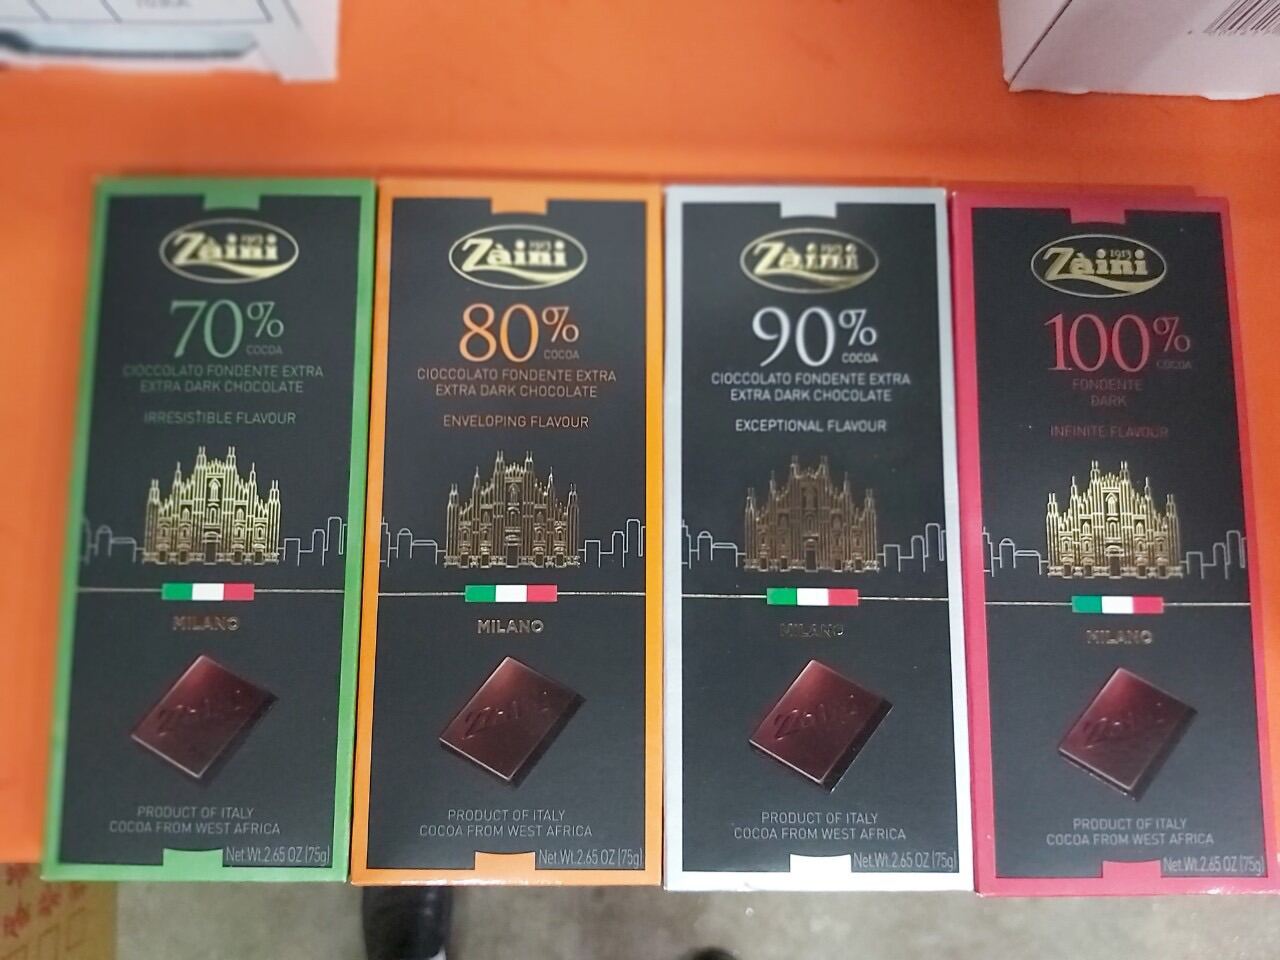 SOCOLA ĐẮNG ZANI NHẬP KHẨU ITALY - 70% 80% 90% 100% kakao thumbnail